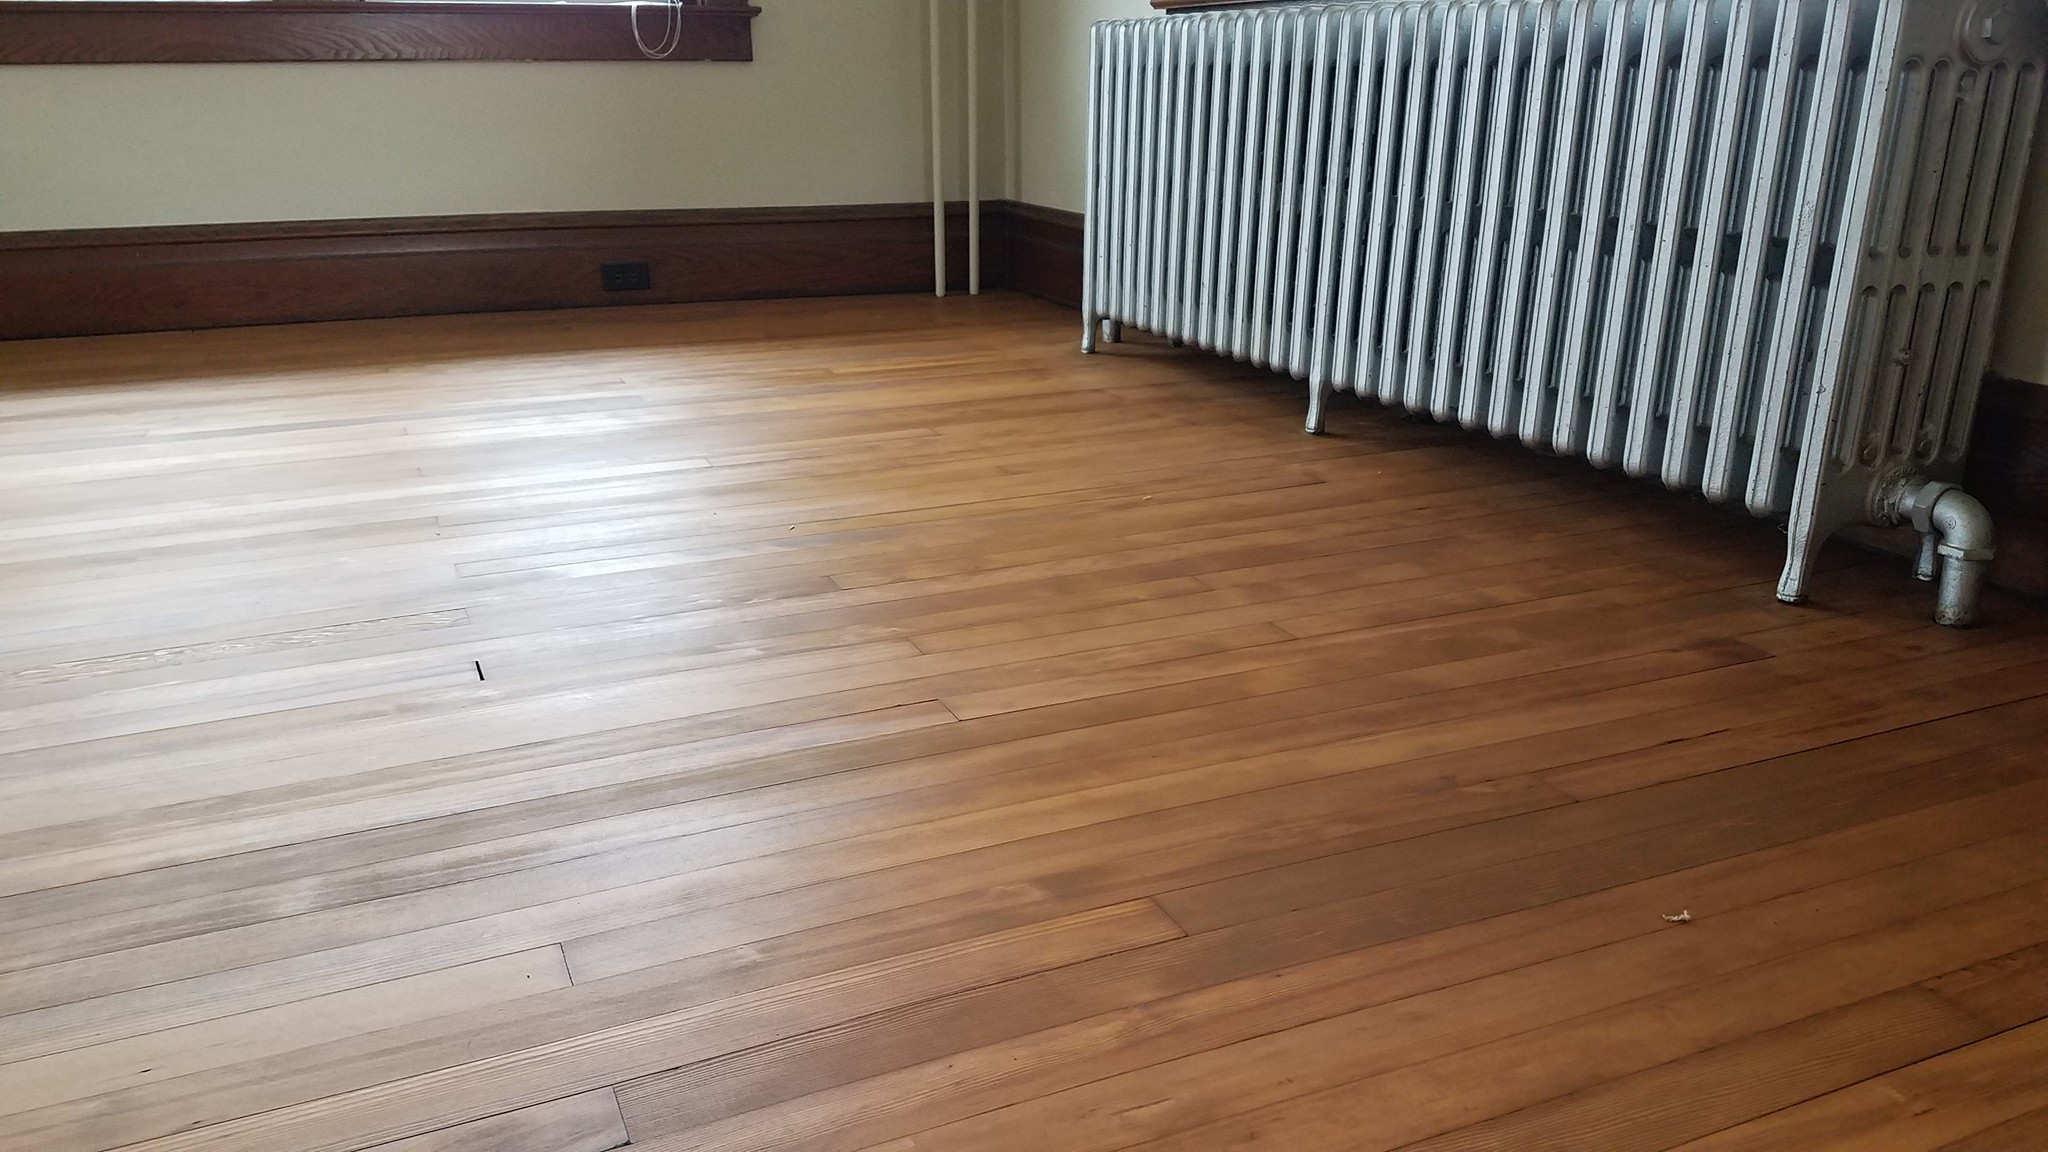 price for sanding and refinishing hardwood floors of vintage wood flooring for 18192487 1622452841115889 4874100895389868825 o